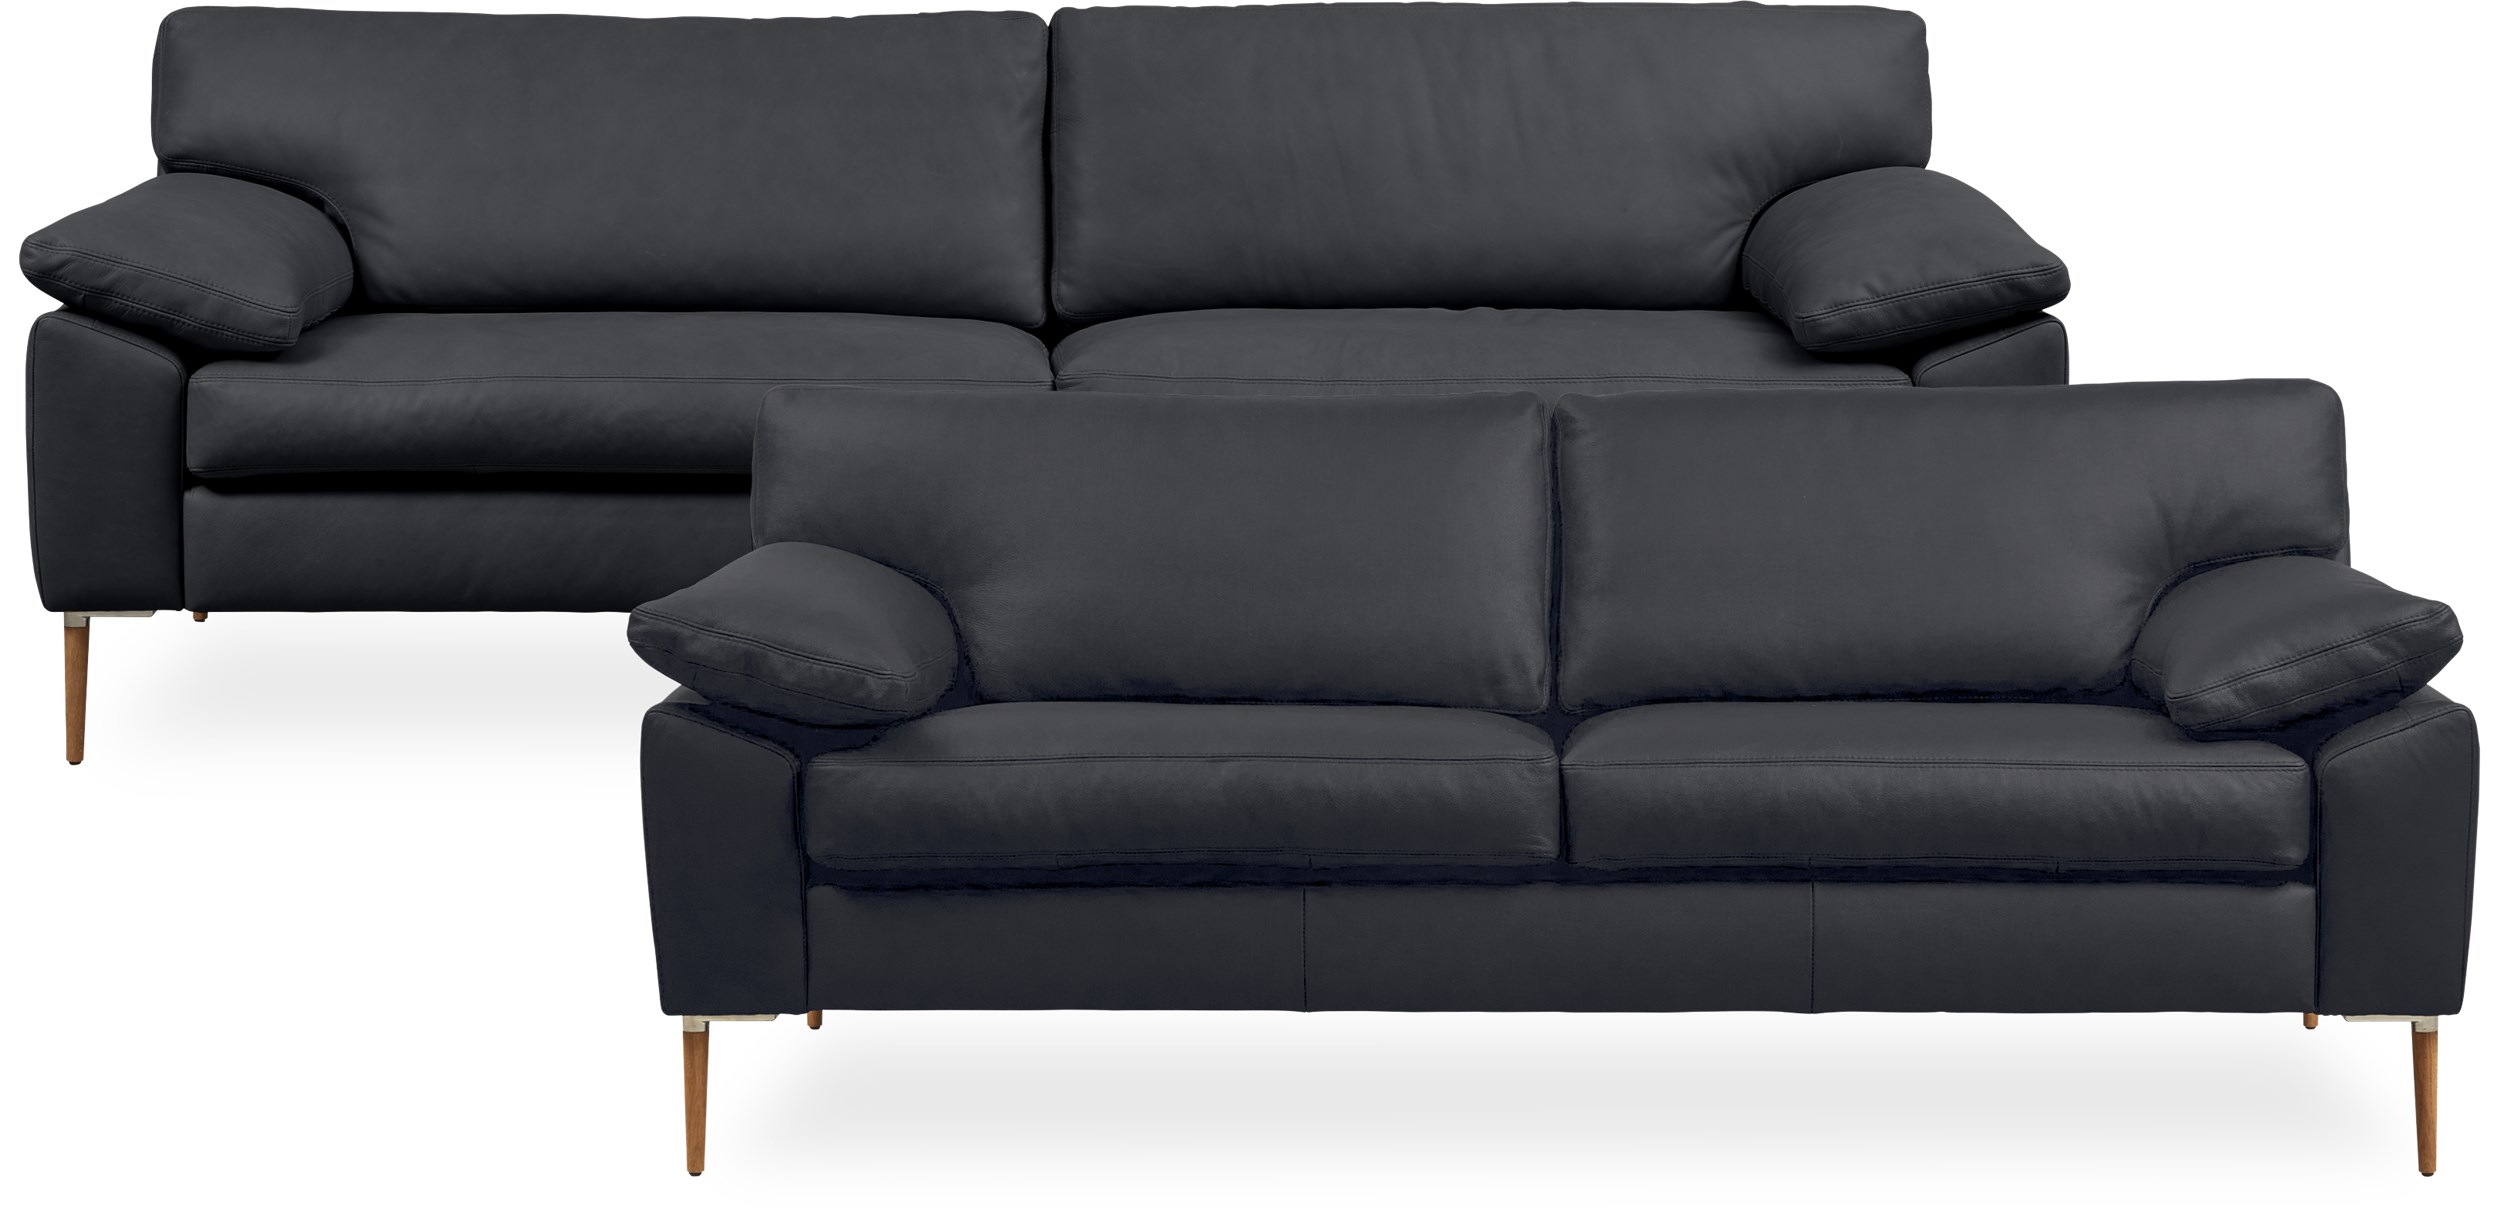 DC 3 Sofa